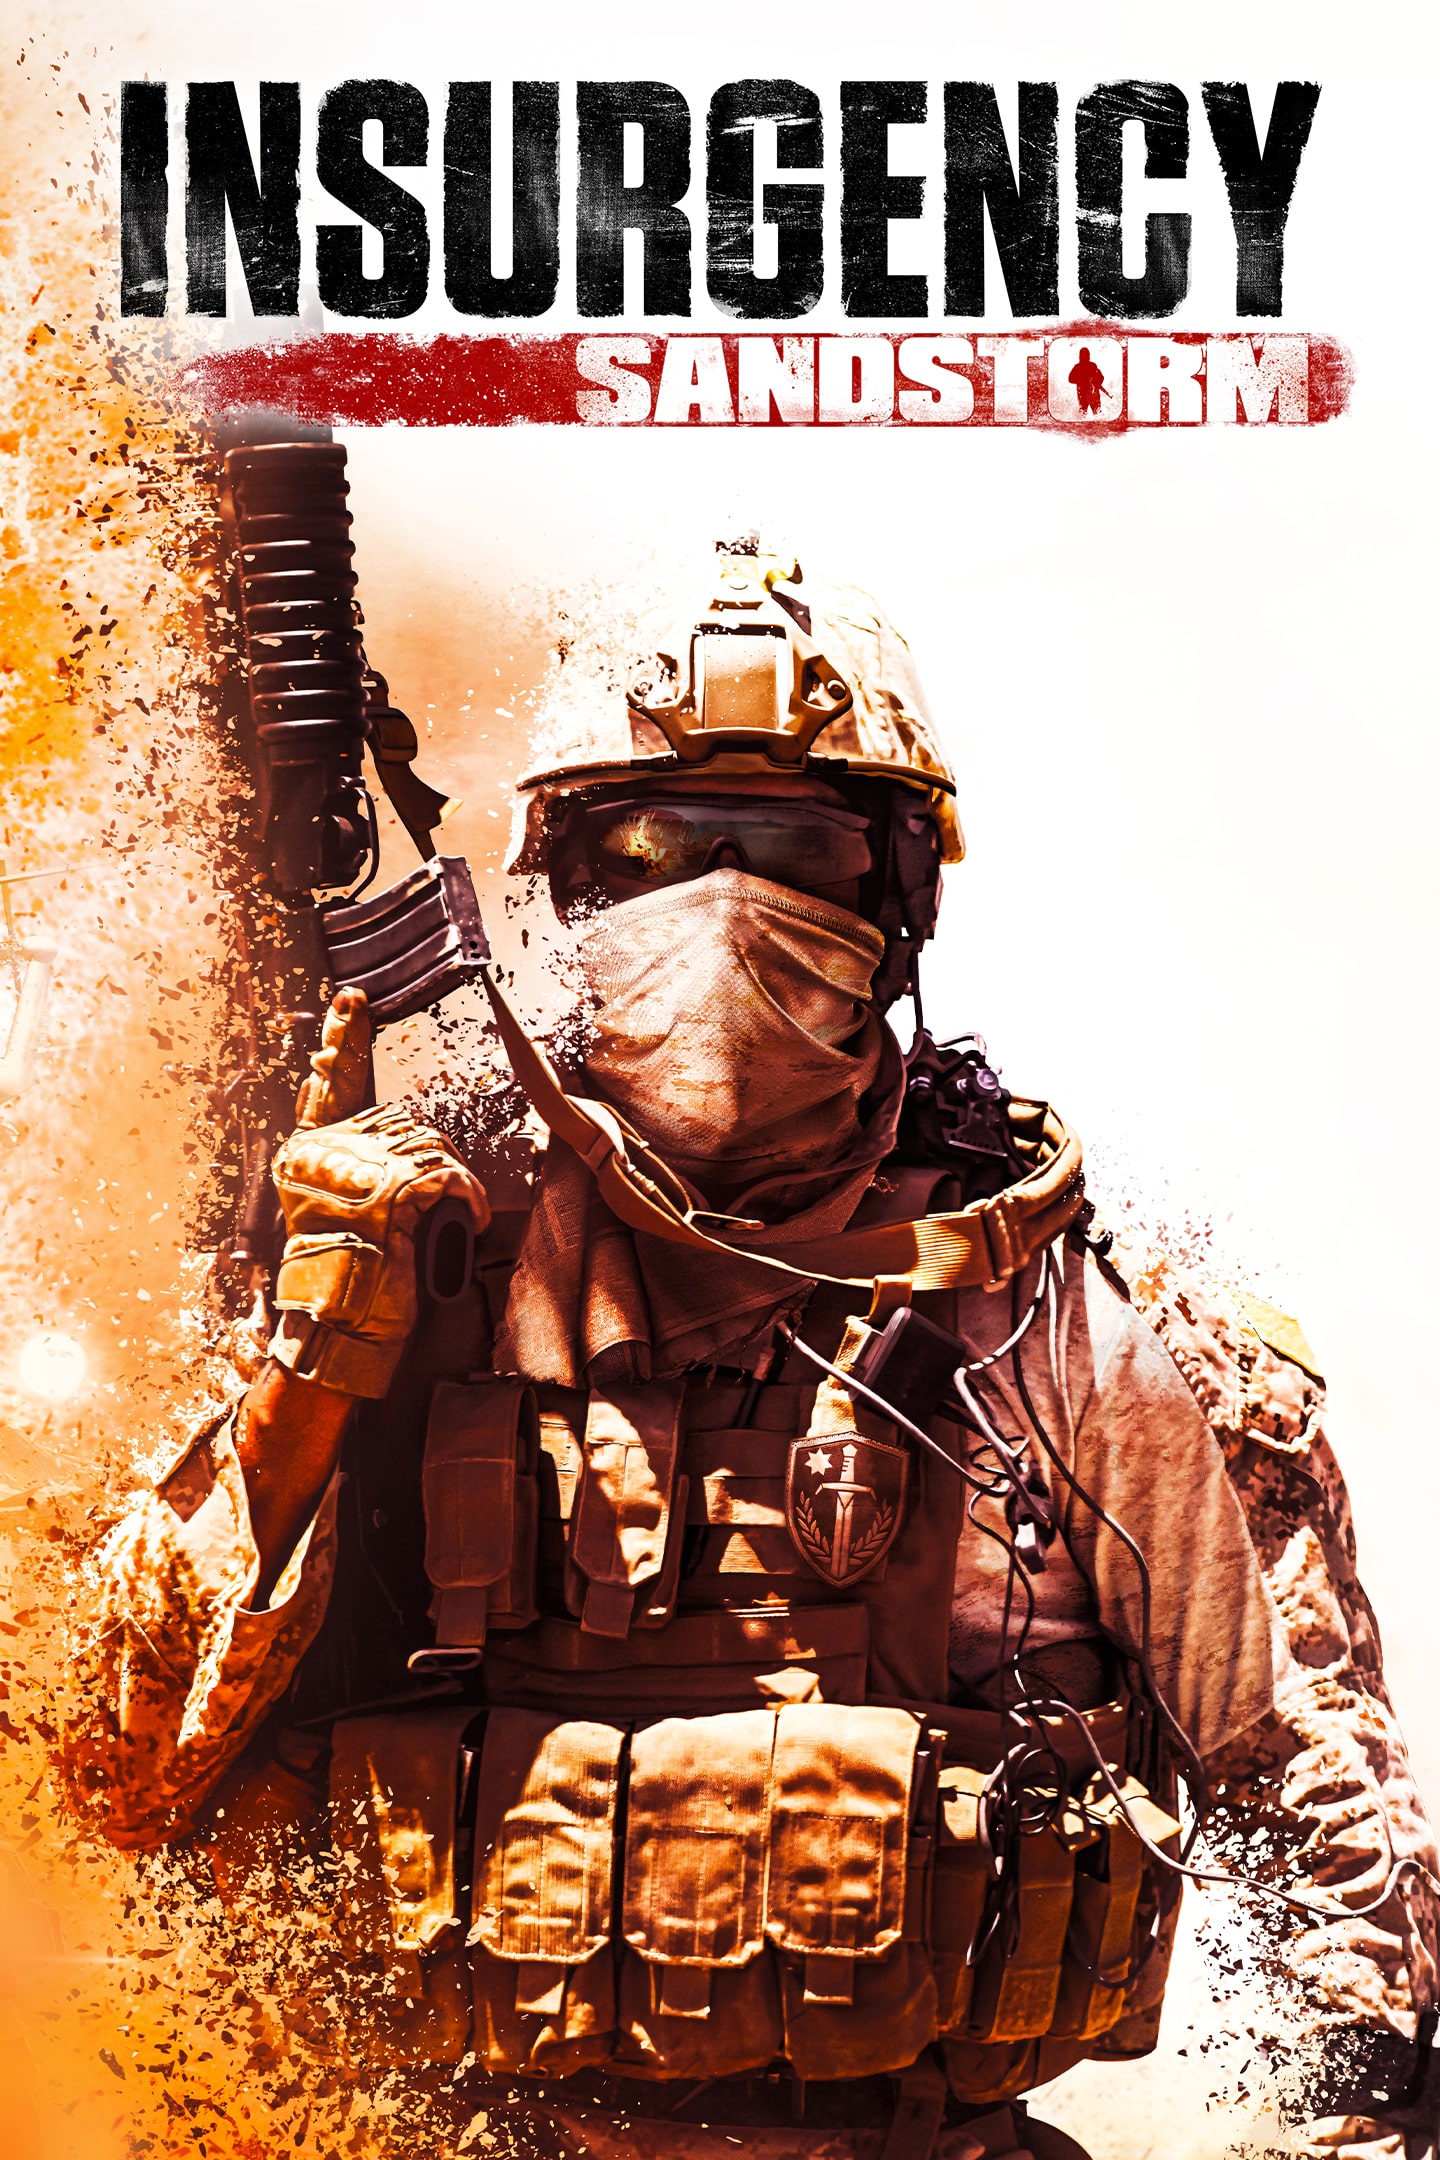 sandstorm insurgency